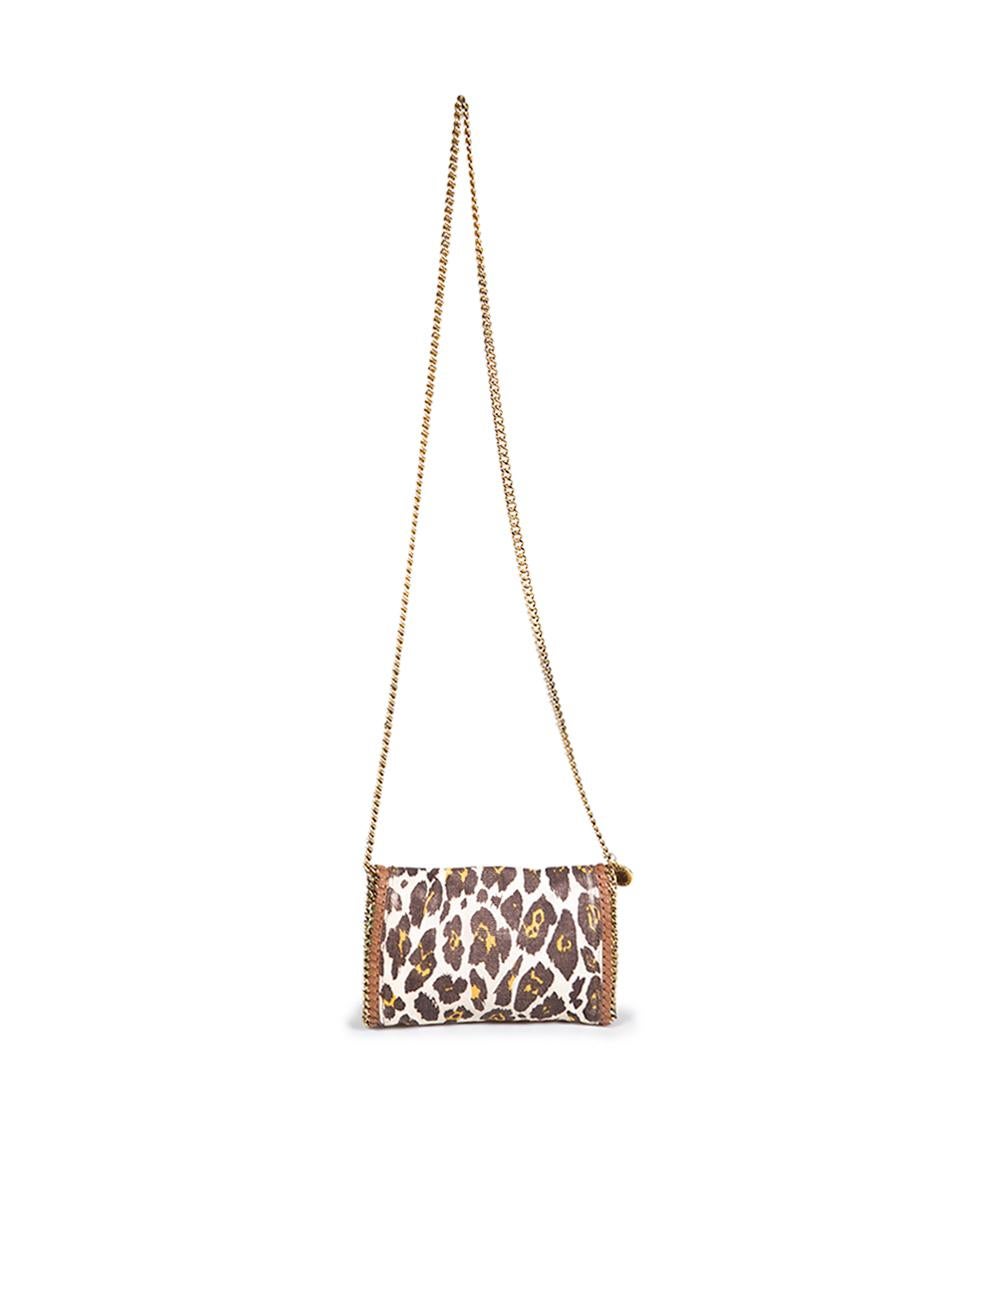 Stella McCartney Brown Leopard Mini Crossbody Bag In Good Condition For Sale In London, GB